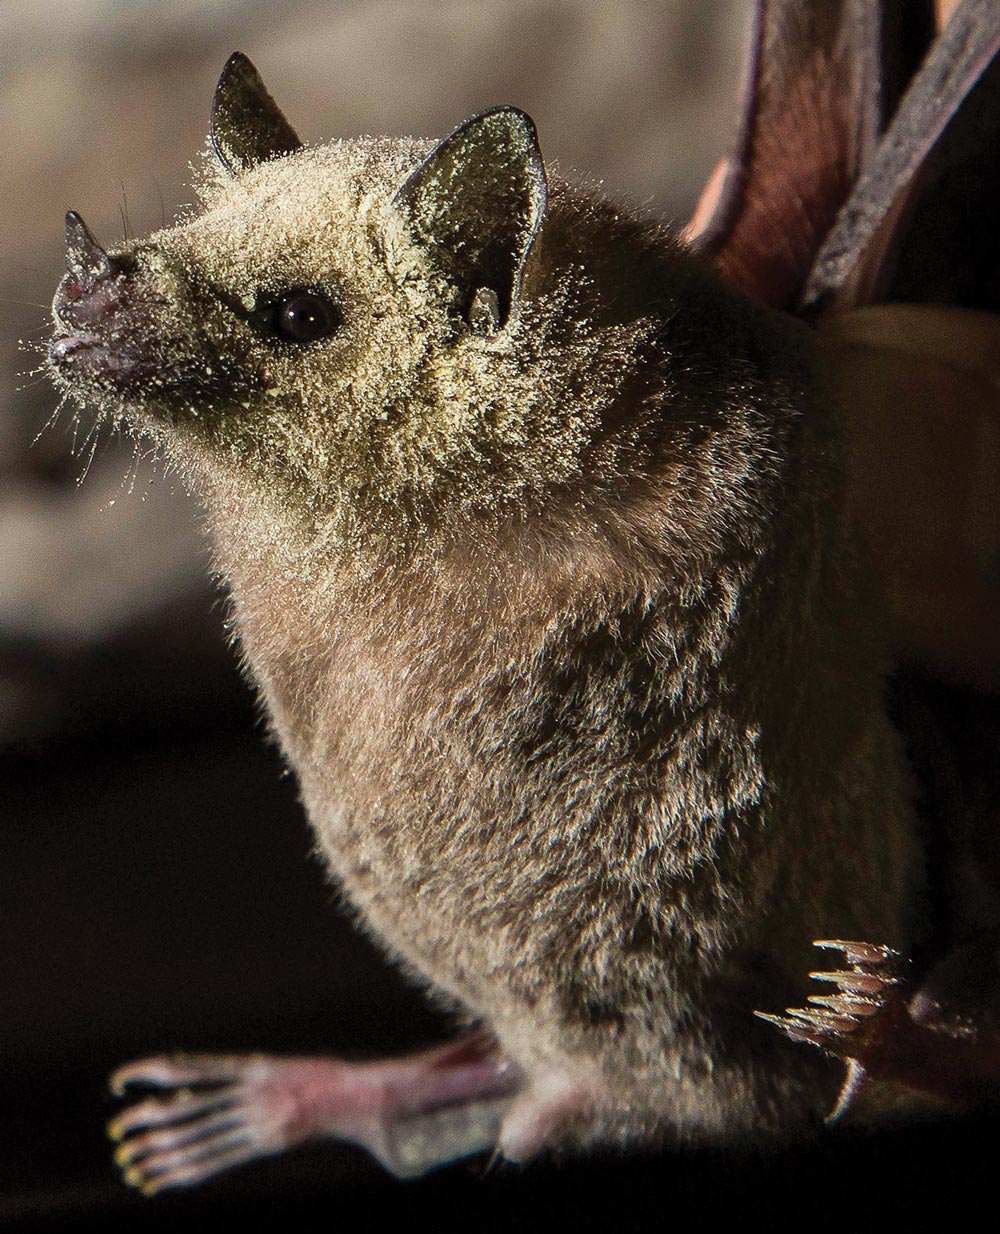 lesser long-nosed bat covered in pollen